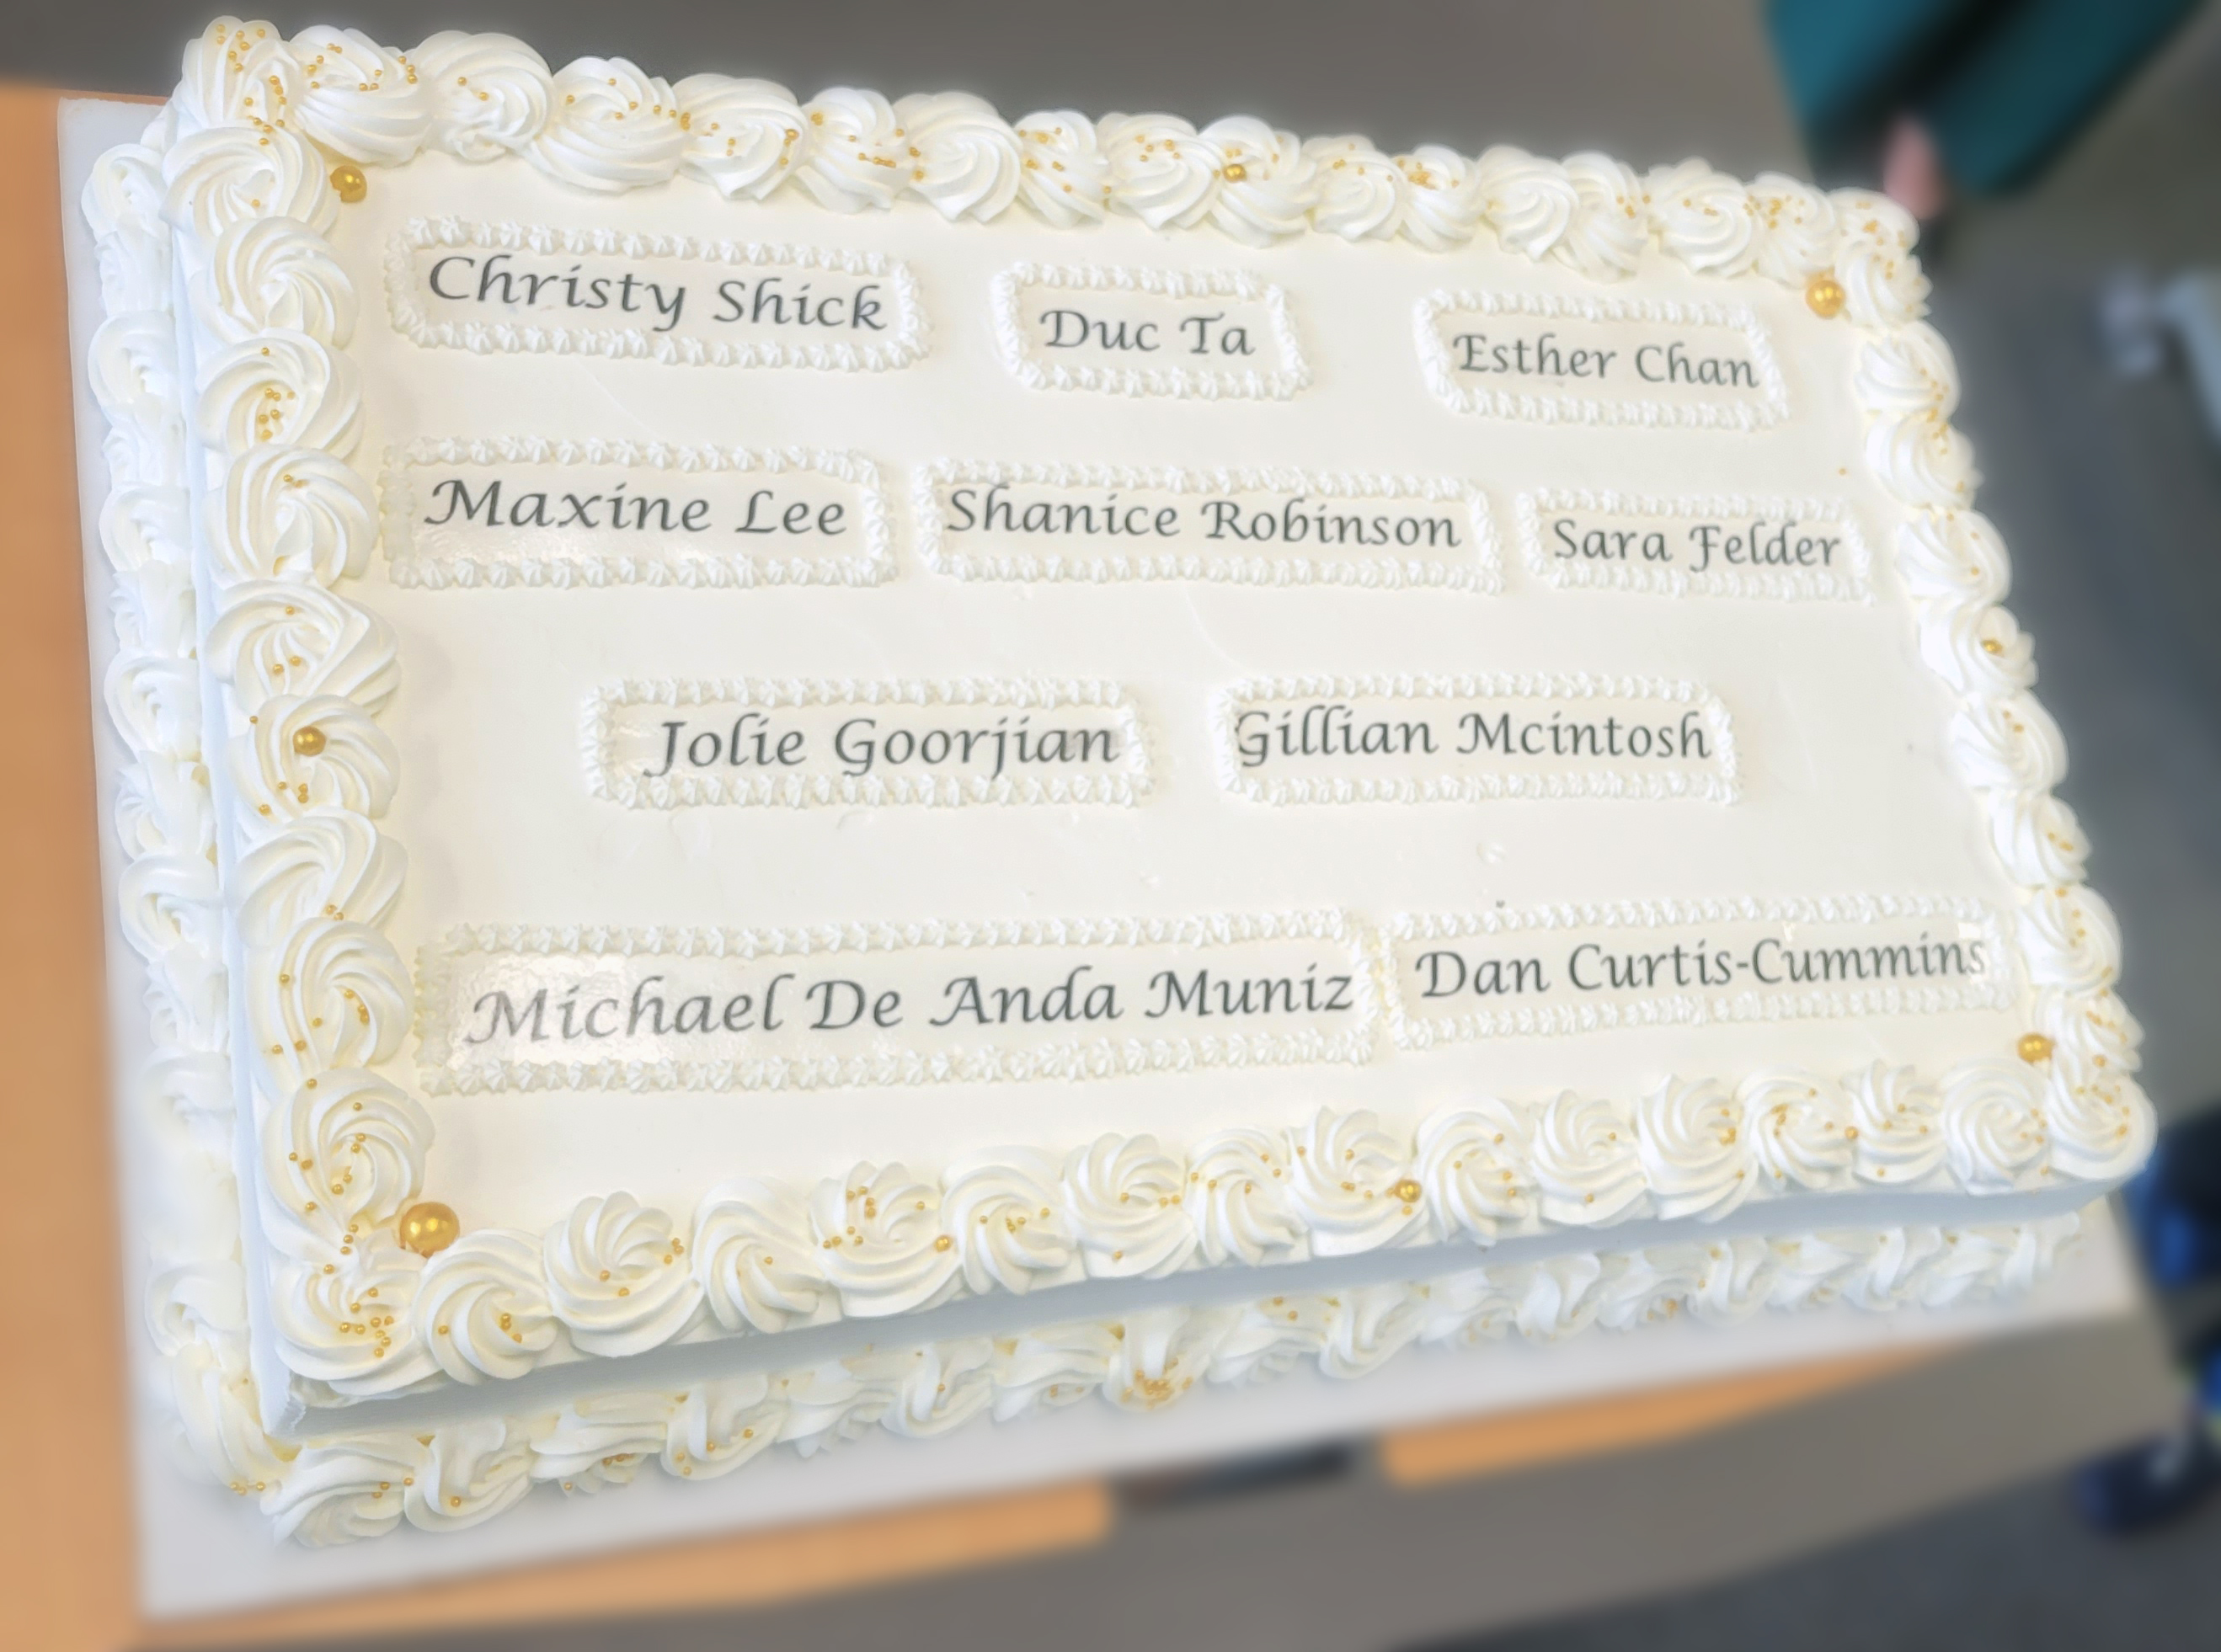 Faculty Teaching Awards Celebration Cake with names of awardees